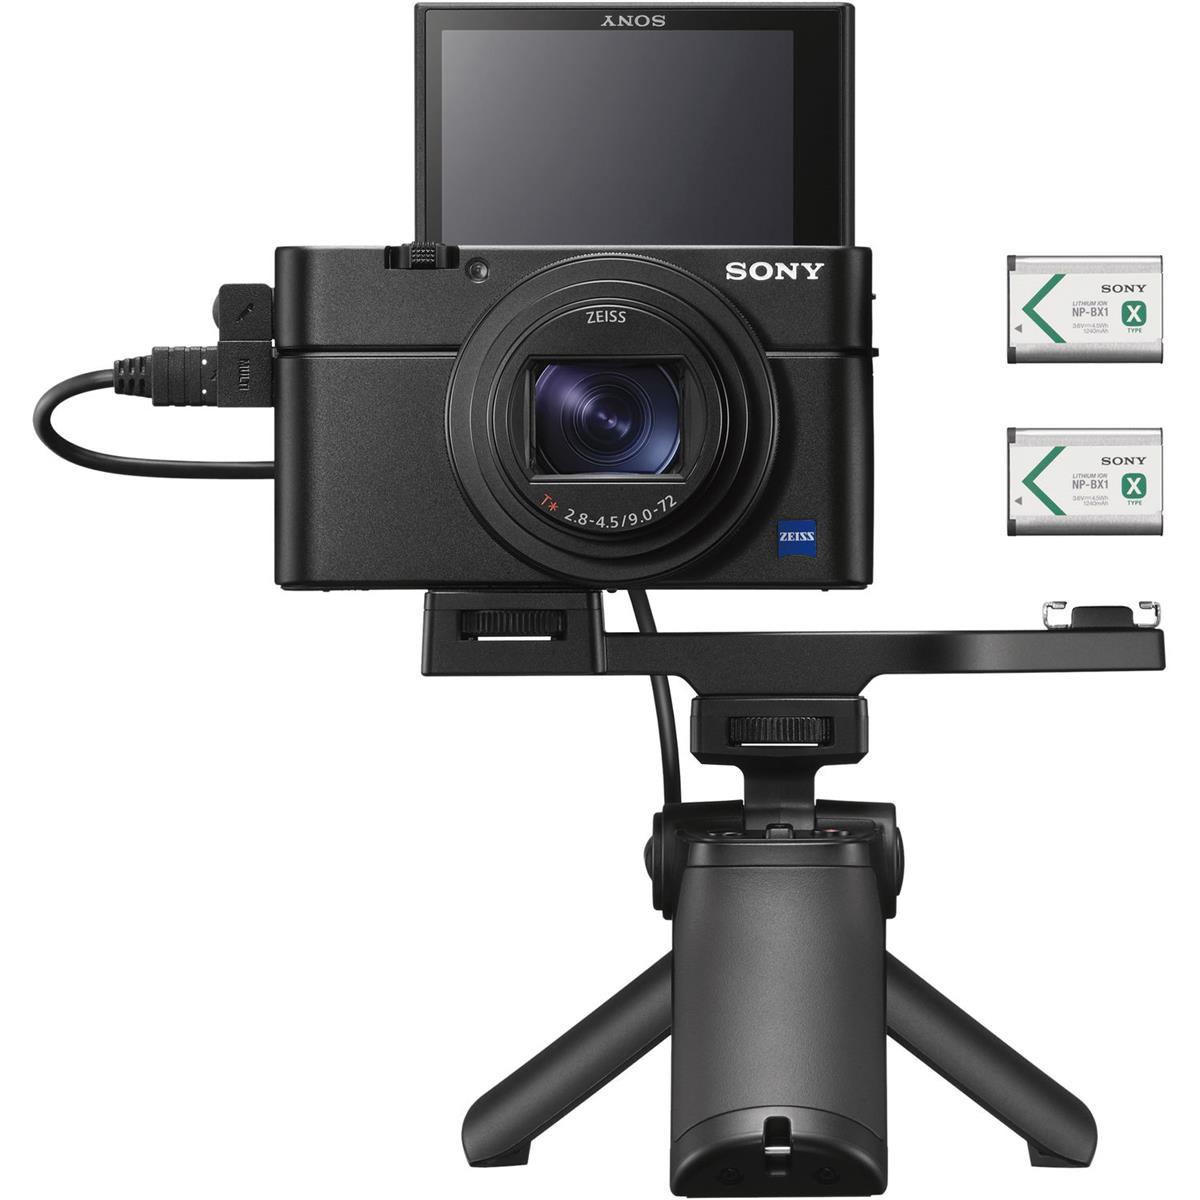 Sony DSC- RX100 VII Digital Camera with Shooting Grip Kit